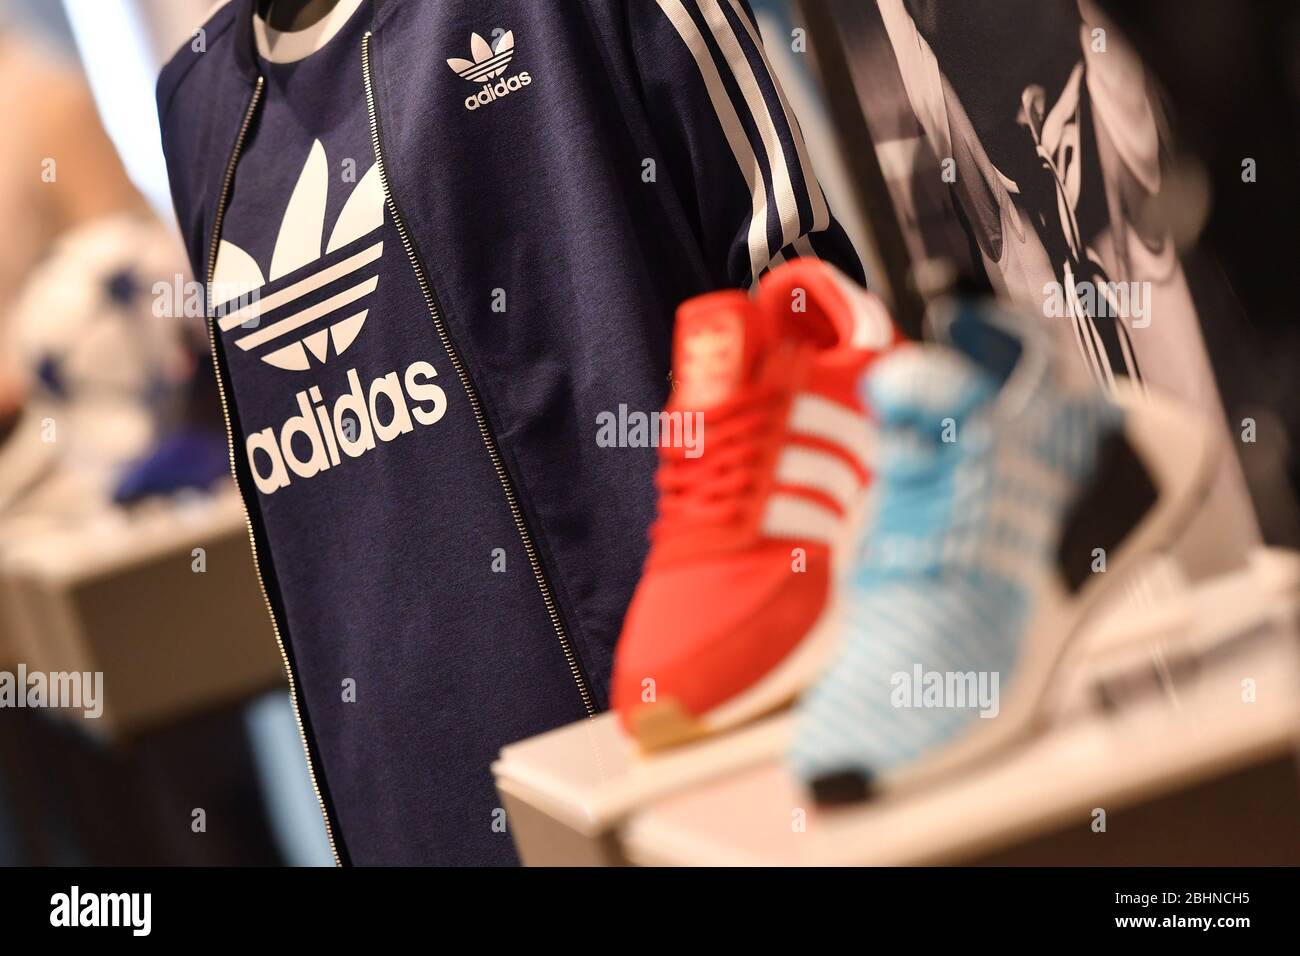 Logo Adidas Immagini e Fotos Stock - Alamy